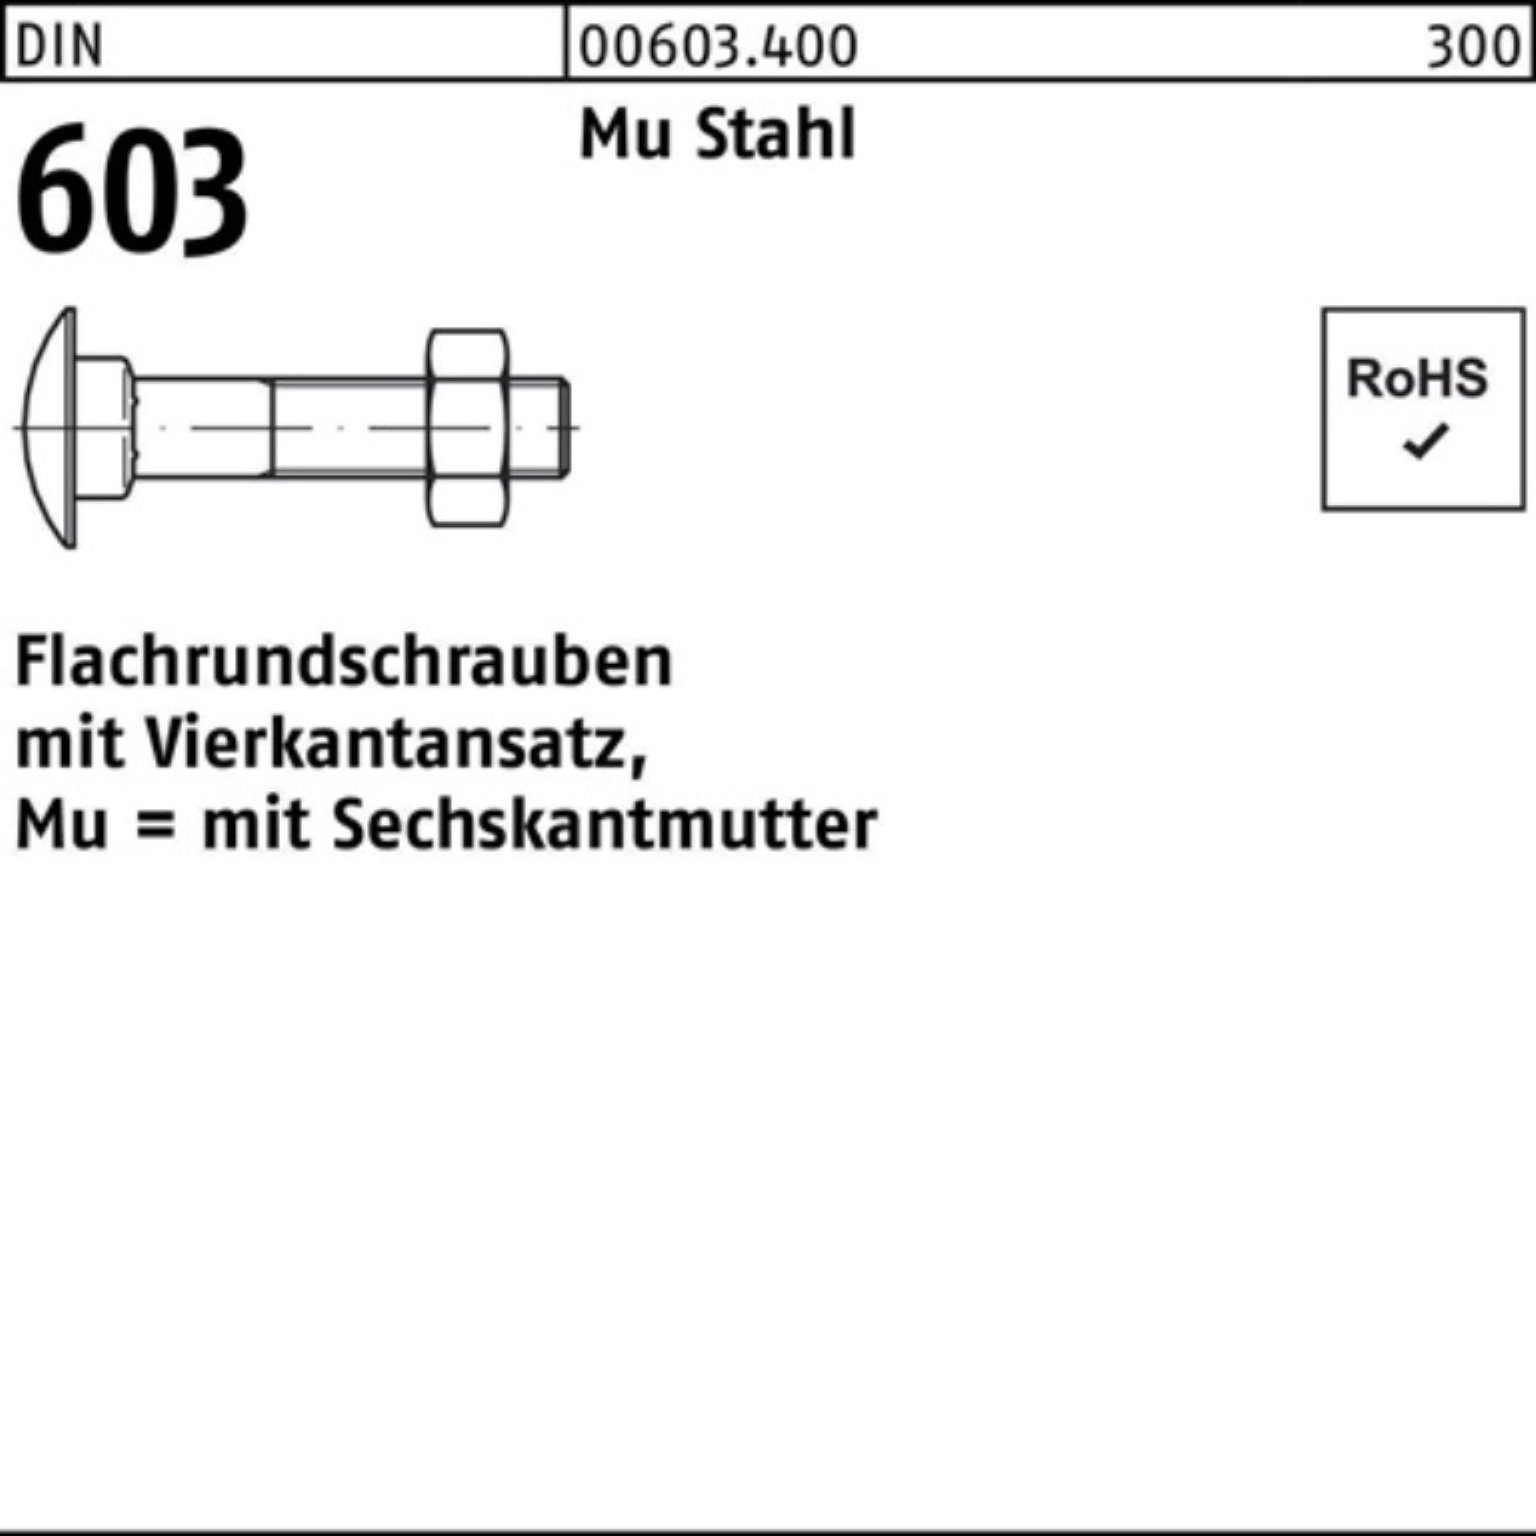 M Vierkantansatz/6-ktmutter Reyher Pack Schraube Flachrundschraube 603 200er M5x35 DIN